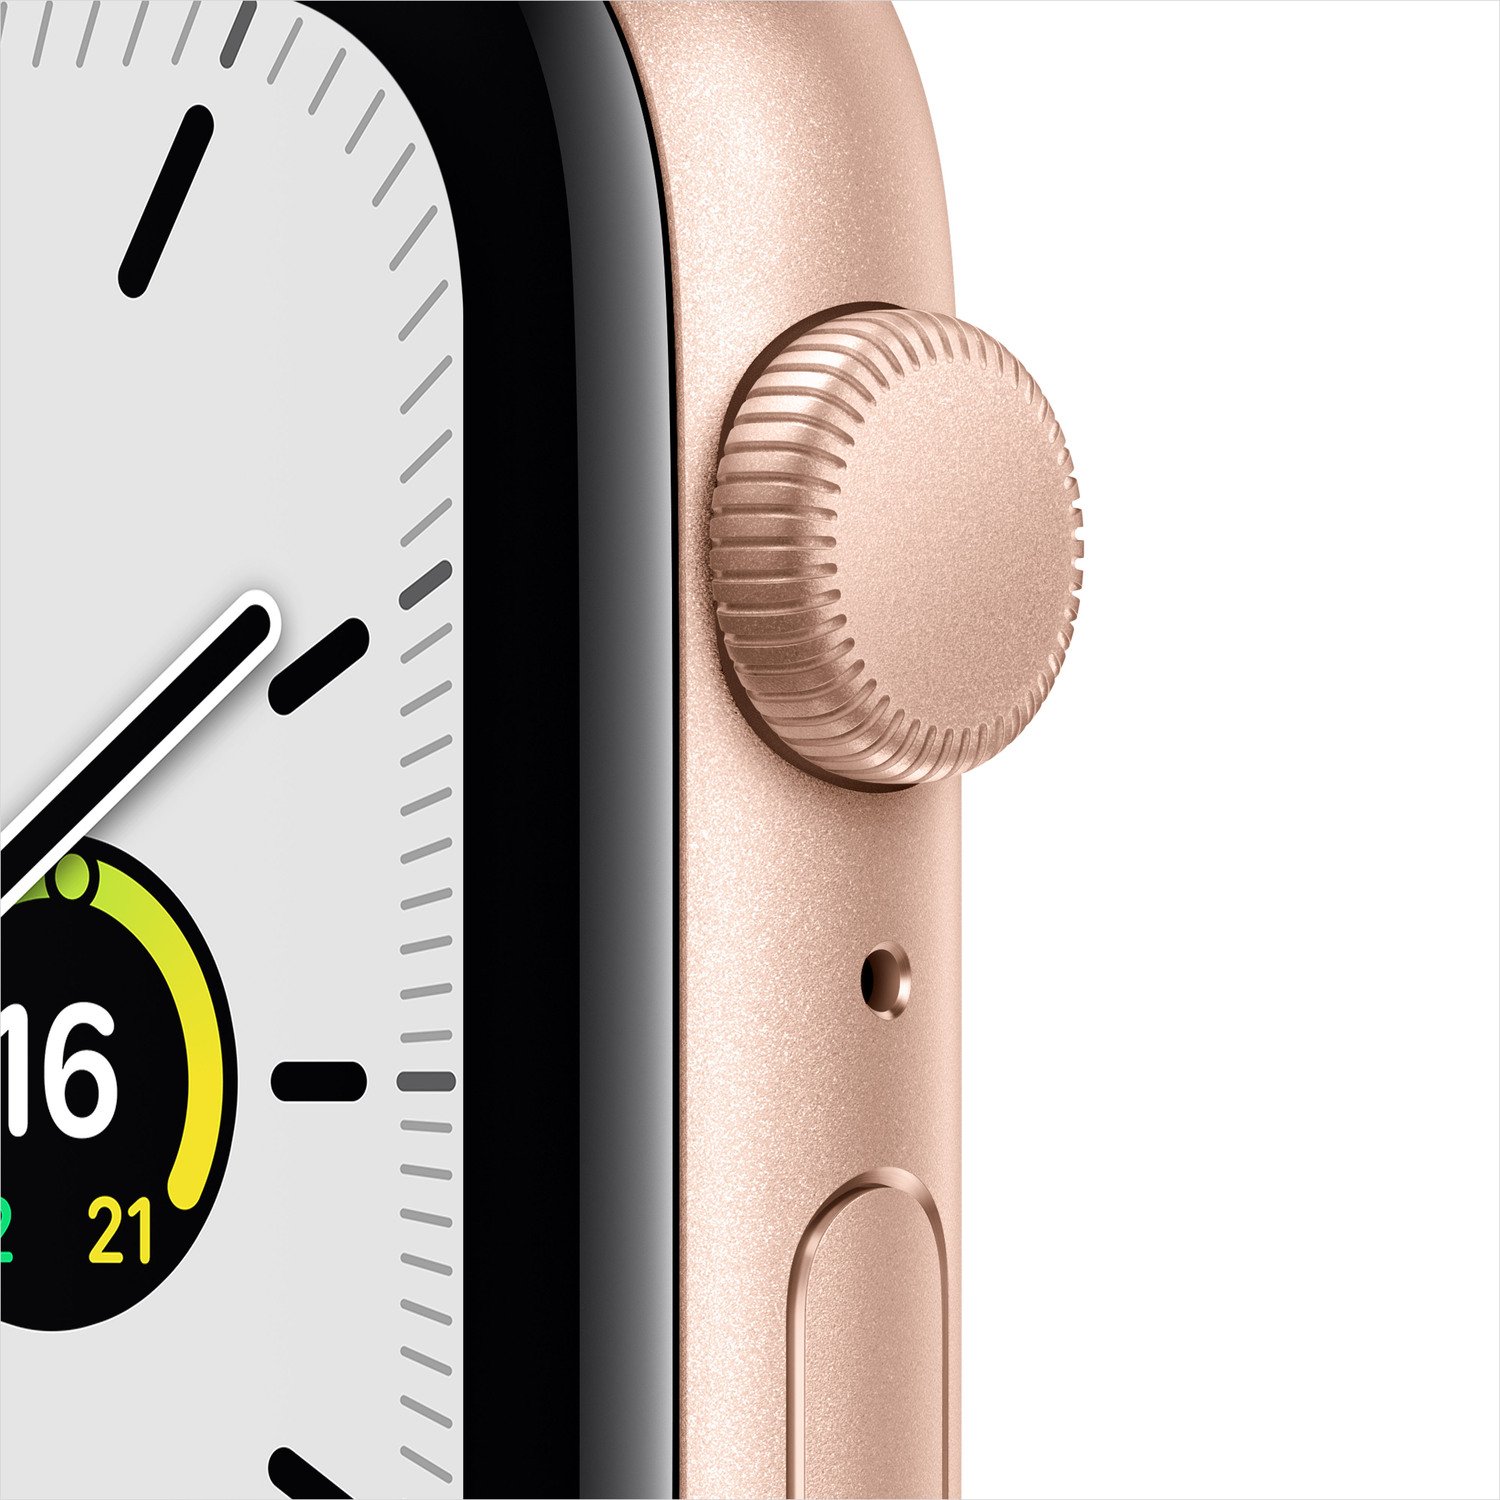 Смарт-часы Apple Watch SE GPS 44mm Gold Aluminium Case with Pink Sand Sport Band Regular фото 